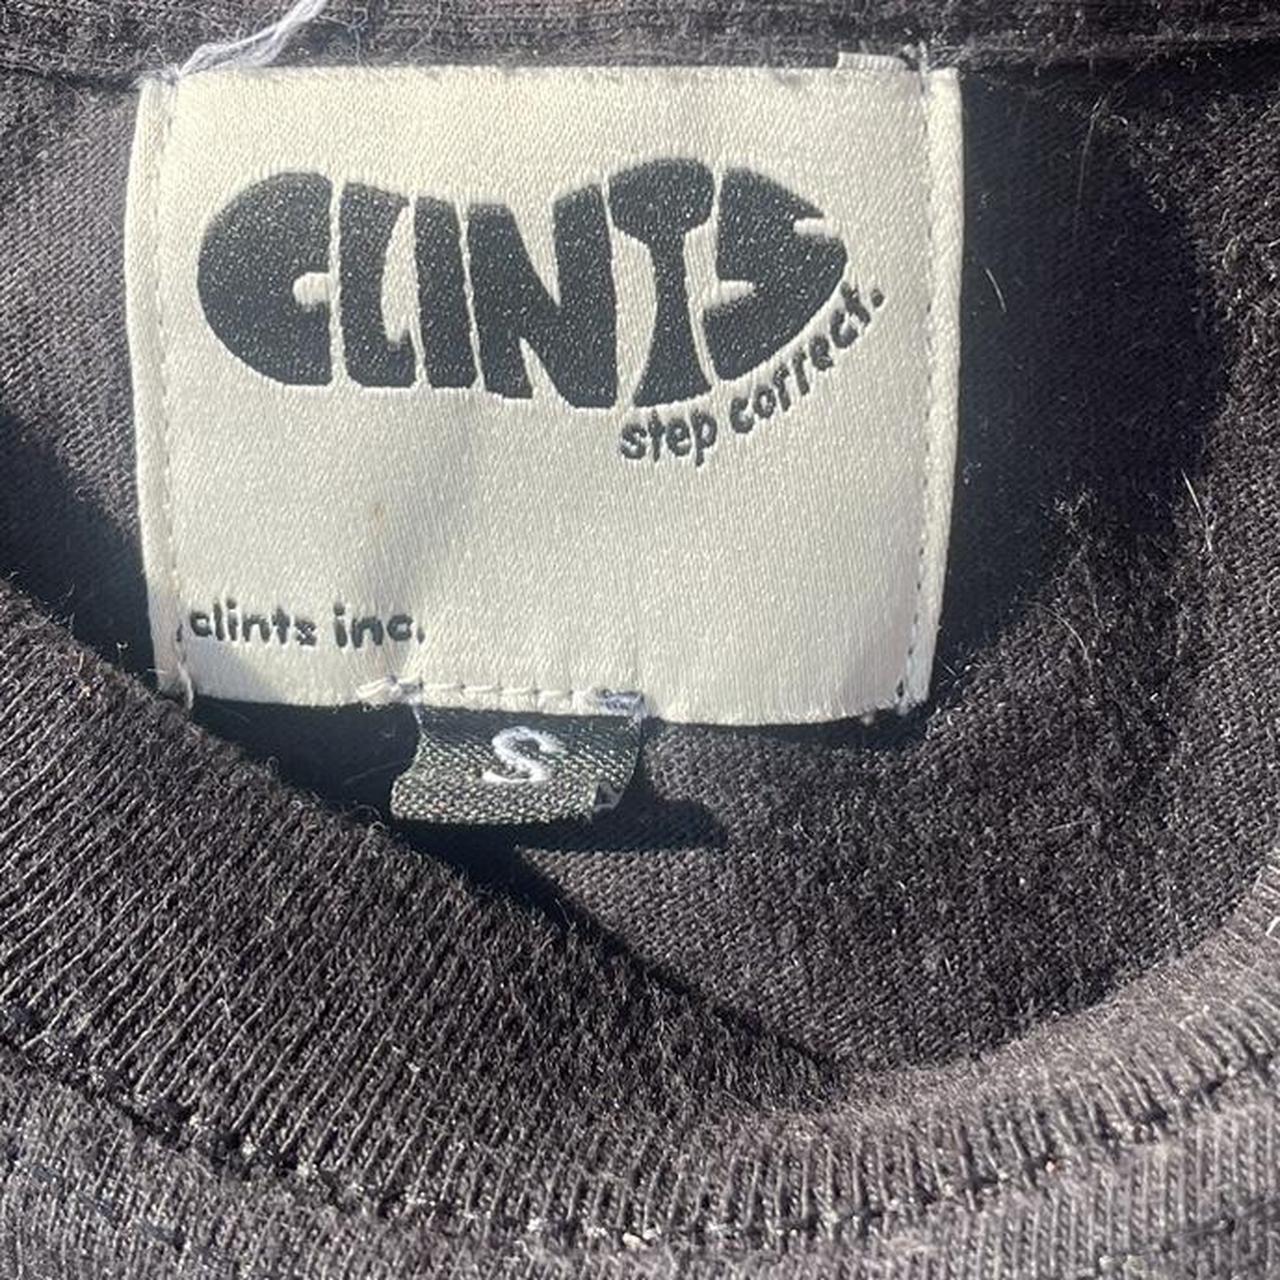 Clints x Patta tee really crazy t shirt that you... - Depop